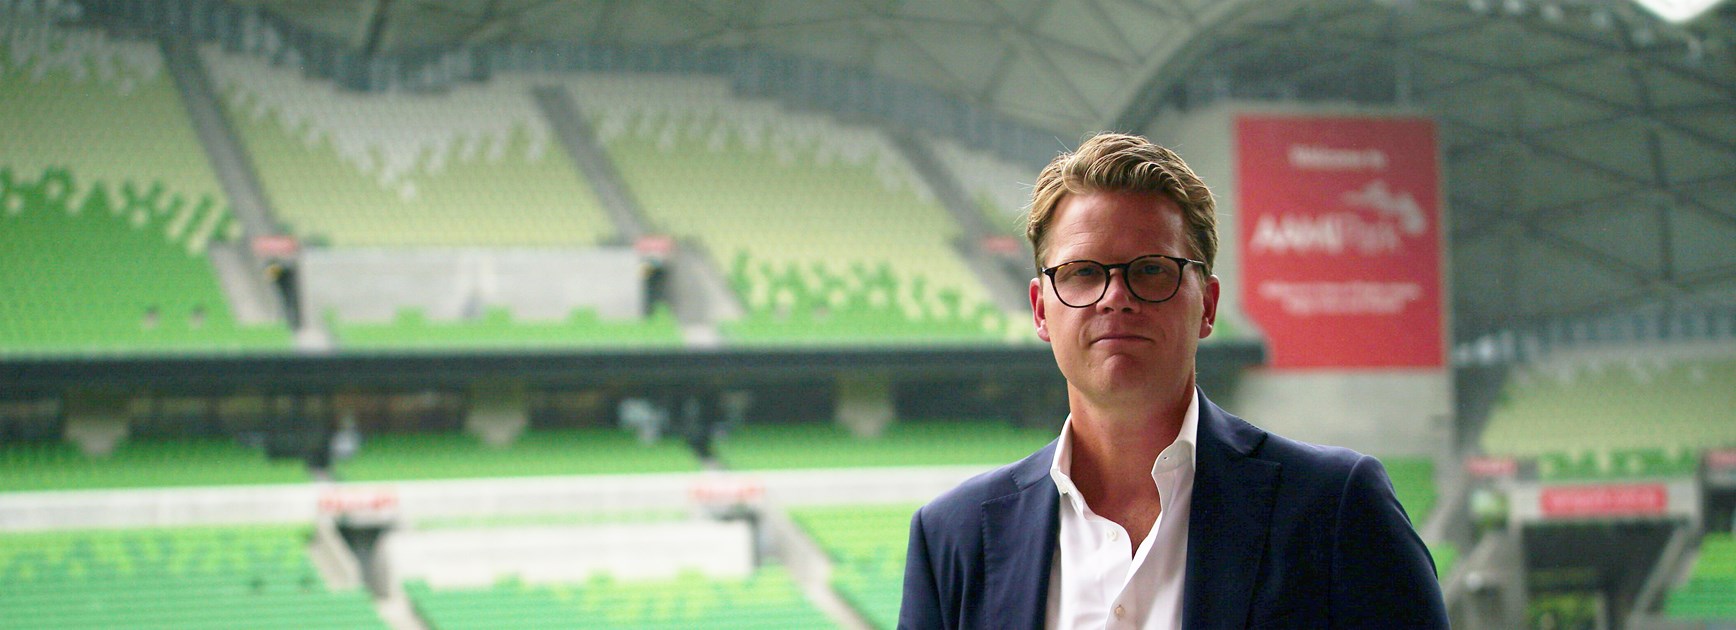 Justin Rodski appointed Melbourne Storm CEO